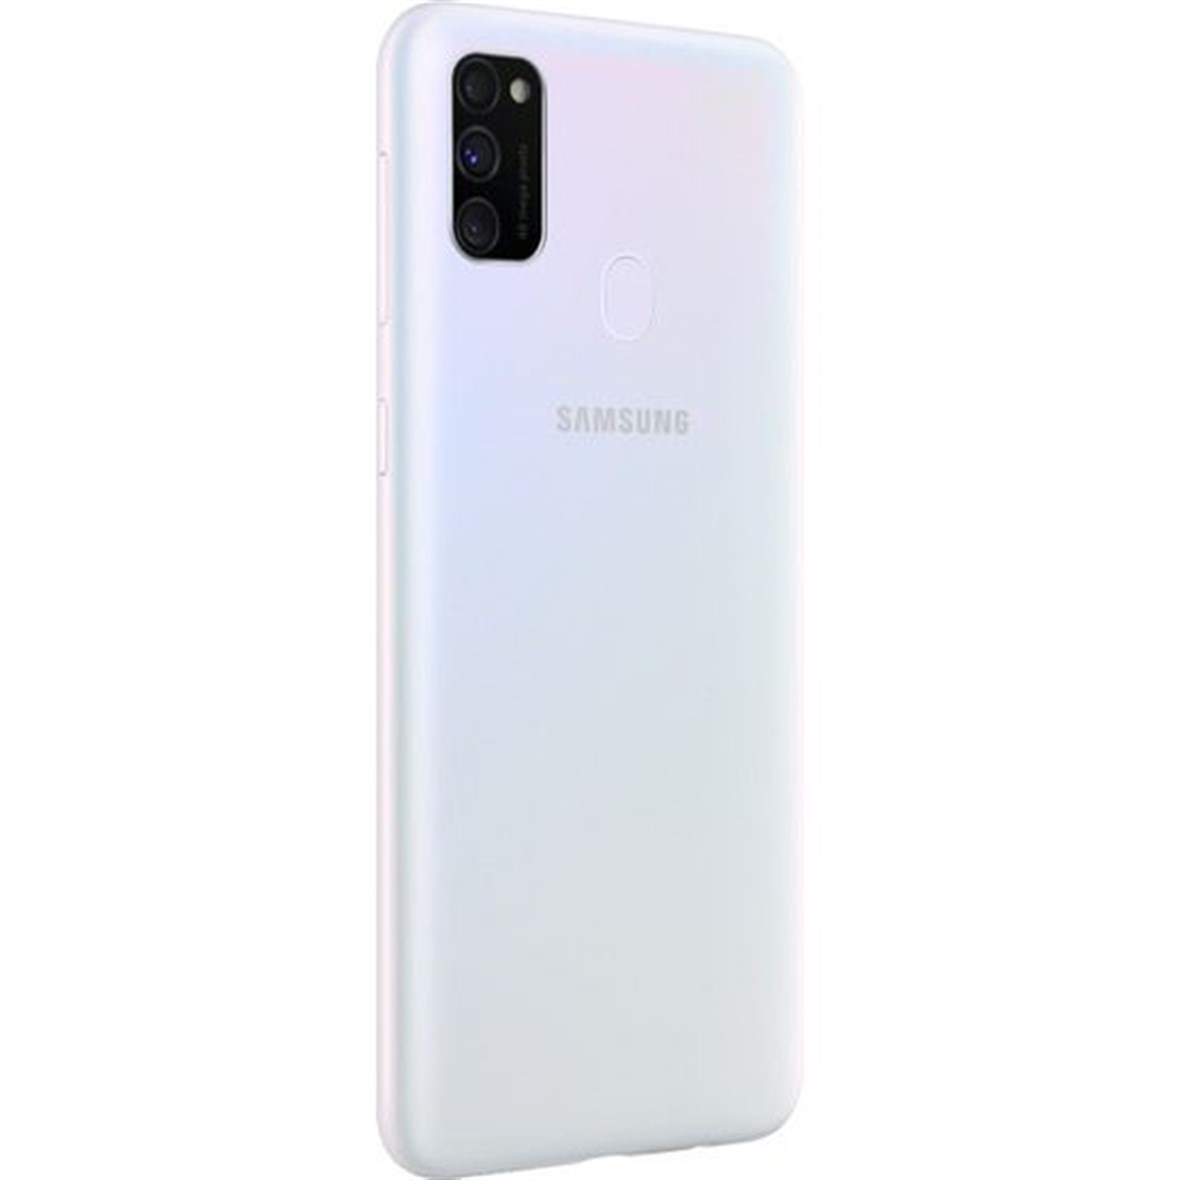 SAMSUNG Galaxy A30s 2019 64GB Beyaz Akıllı Telefon A307F-64GB-WHITE